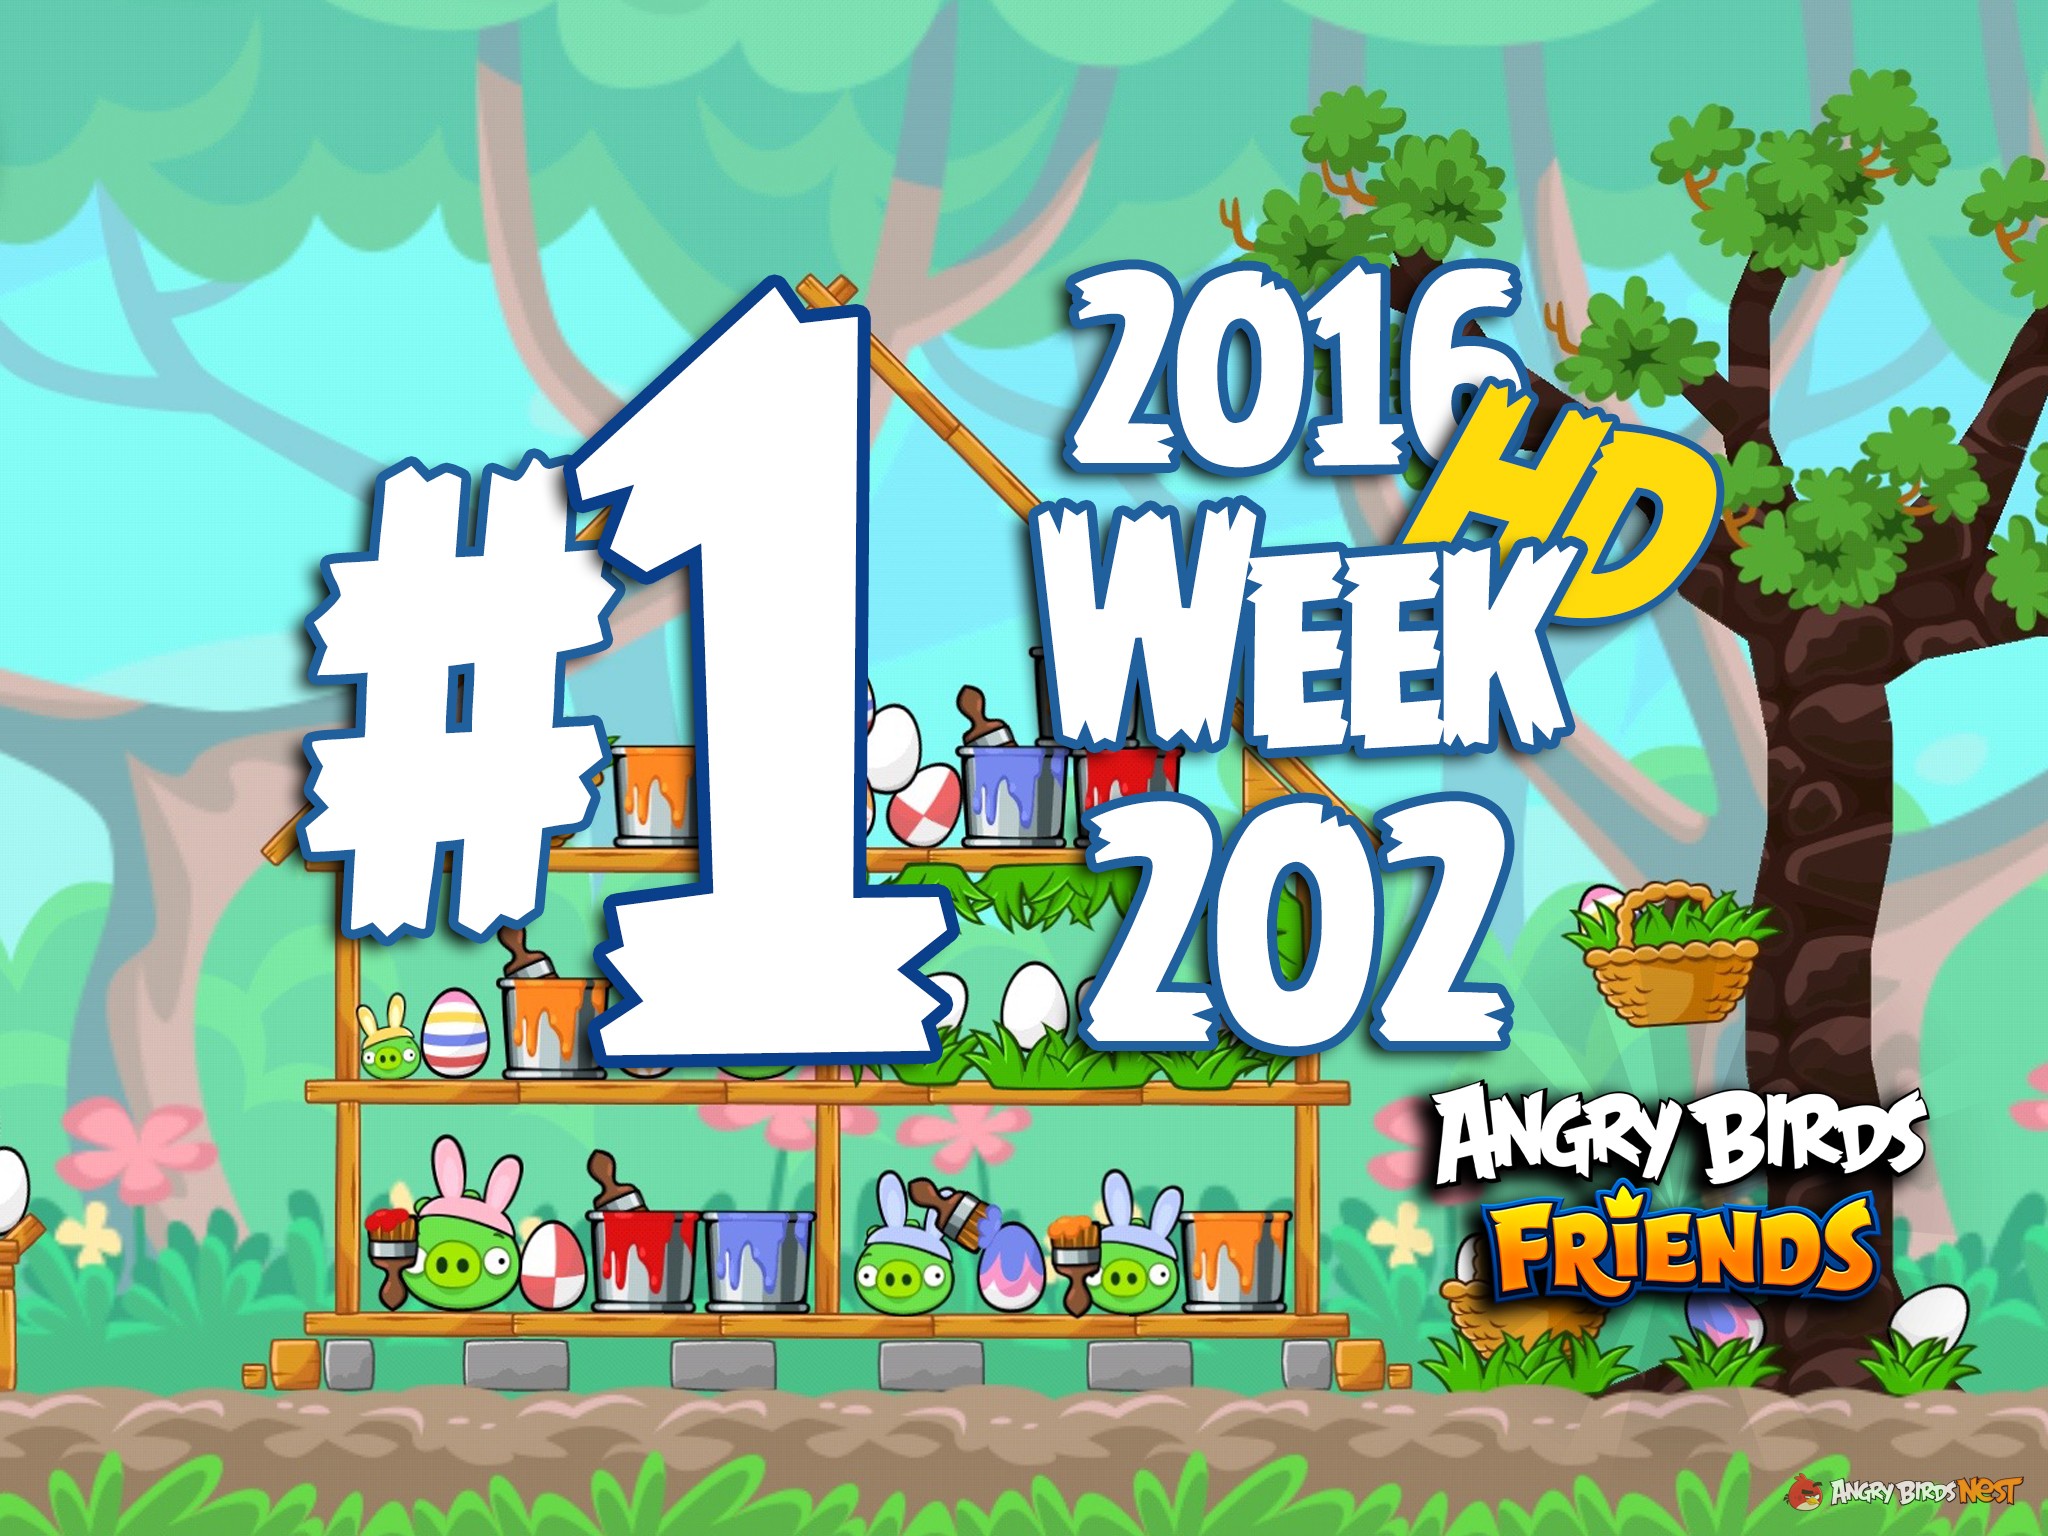 Angry Birds Friends Tournament Level 1 Week 202 Walkthrough | March 24th 2016